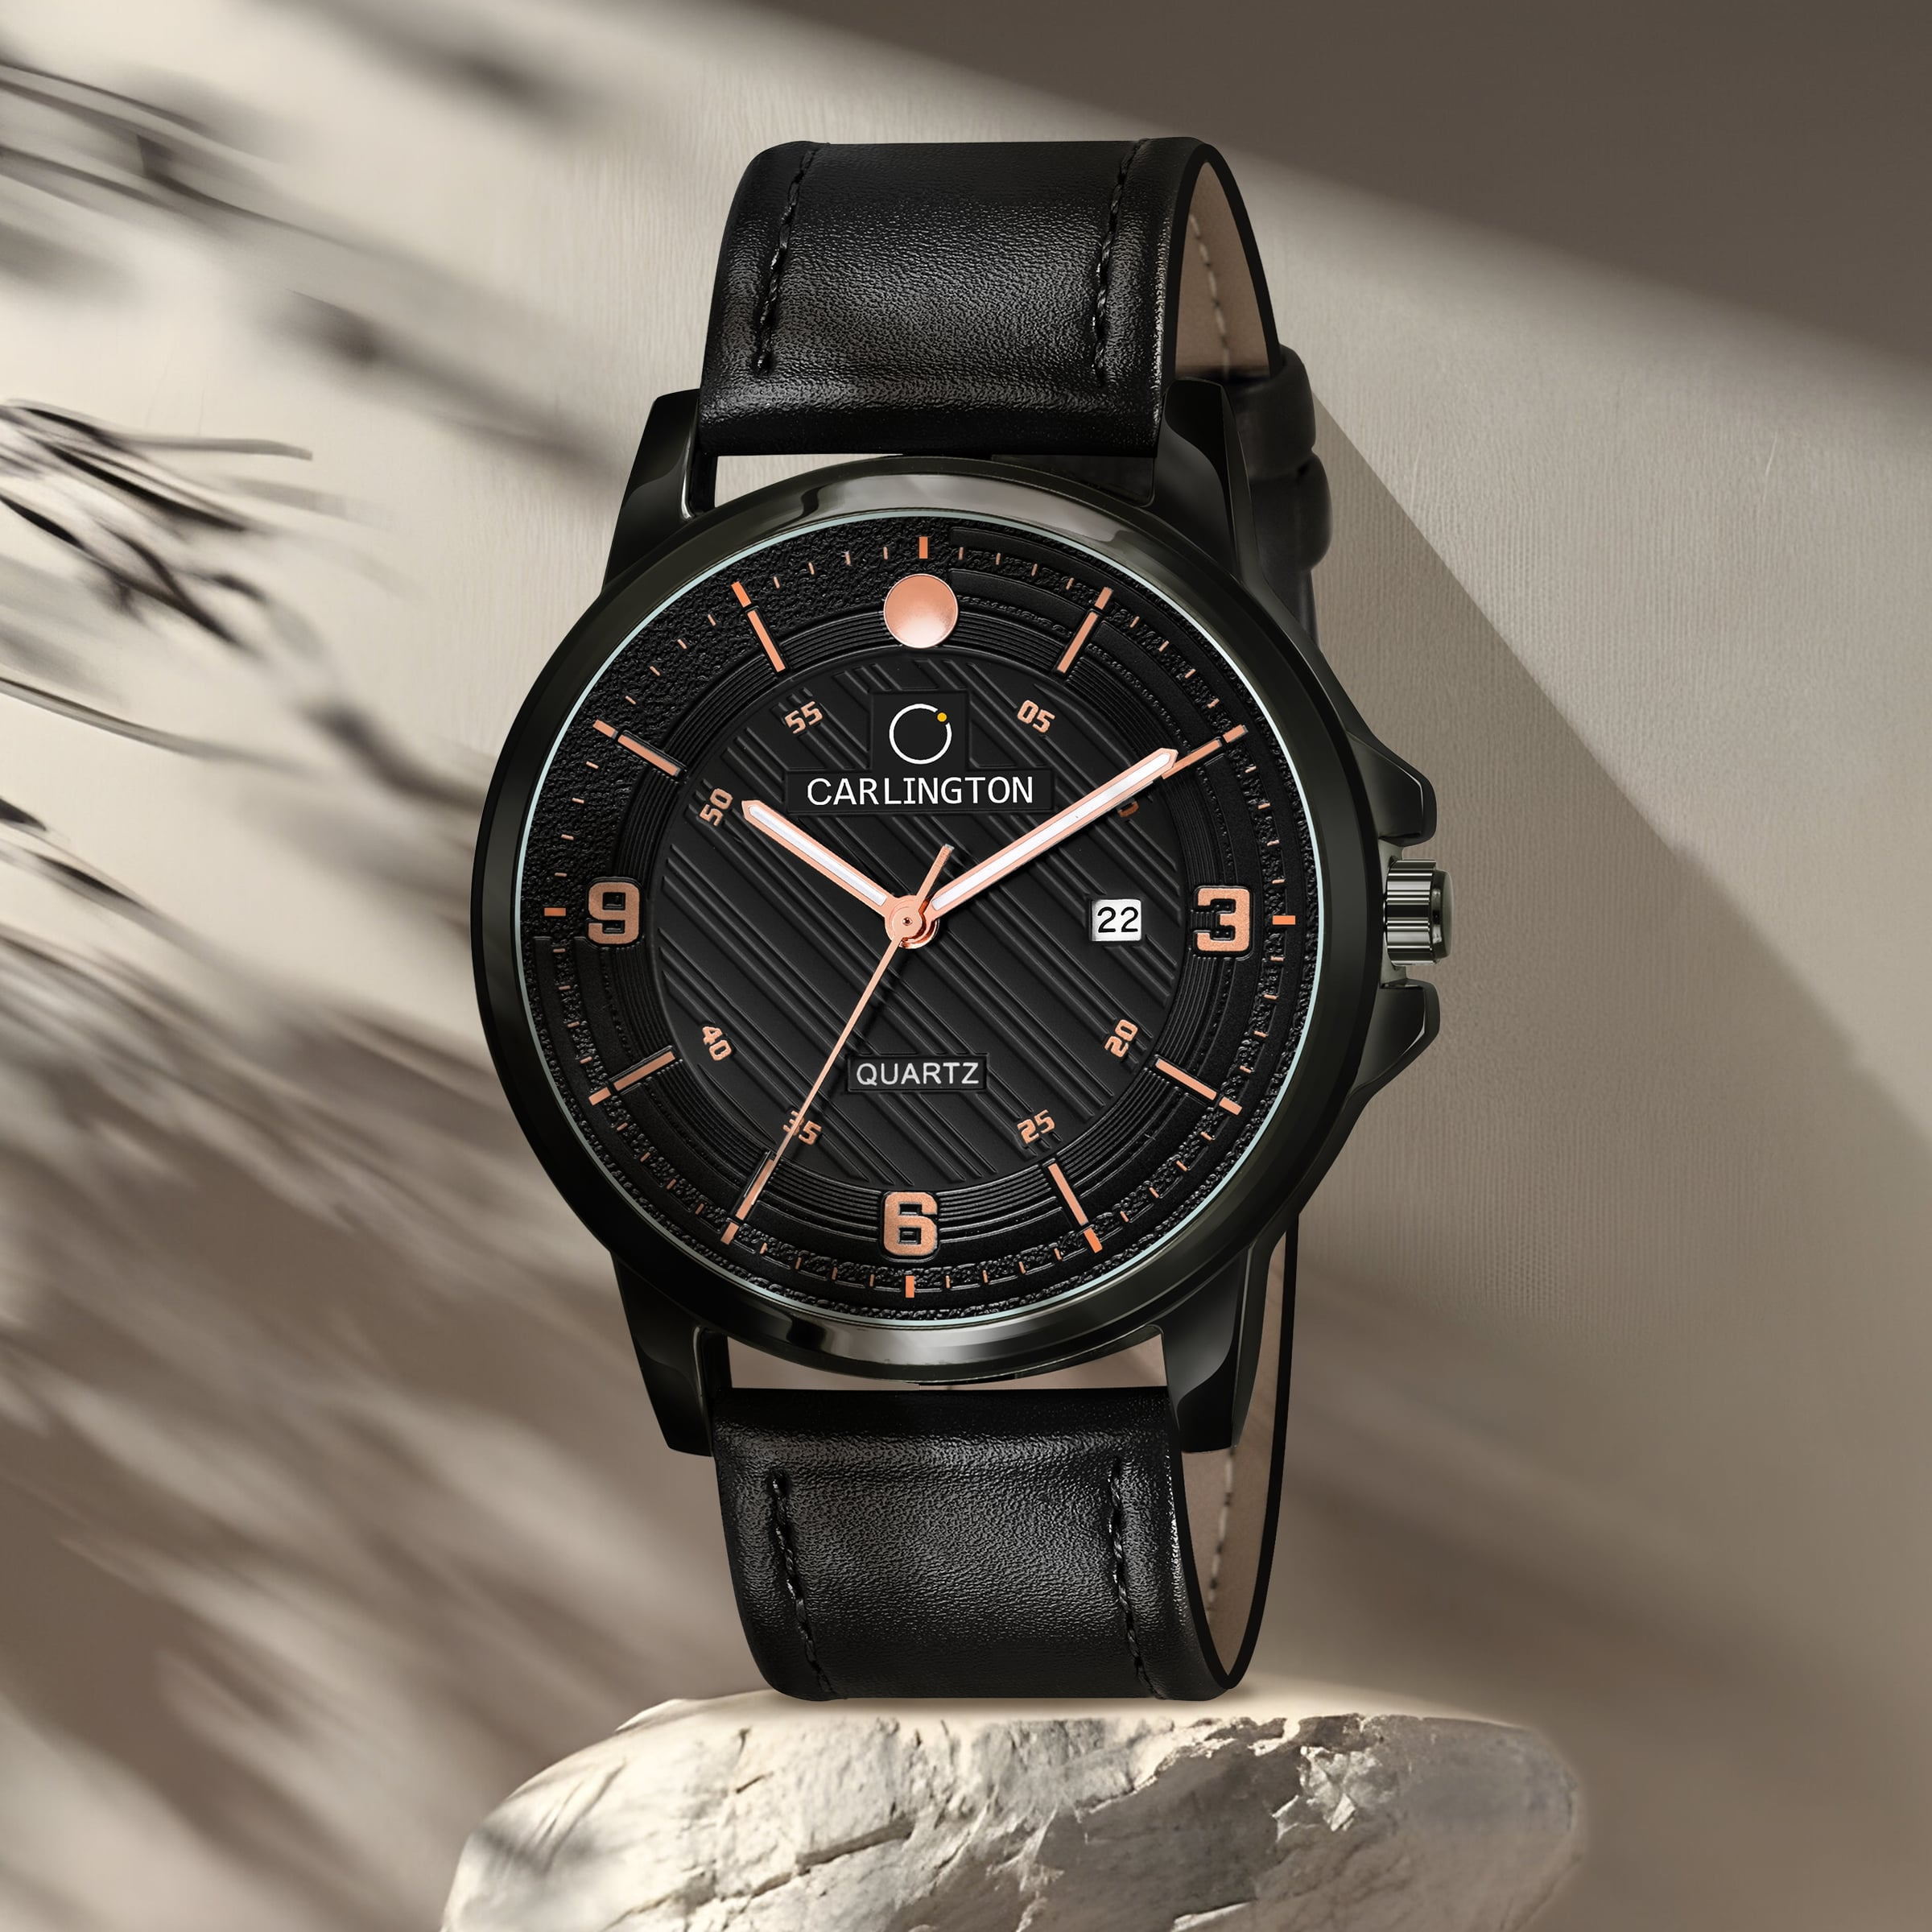 Carlington elite analog men's watch ct1050 black